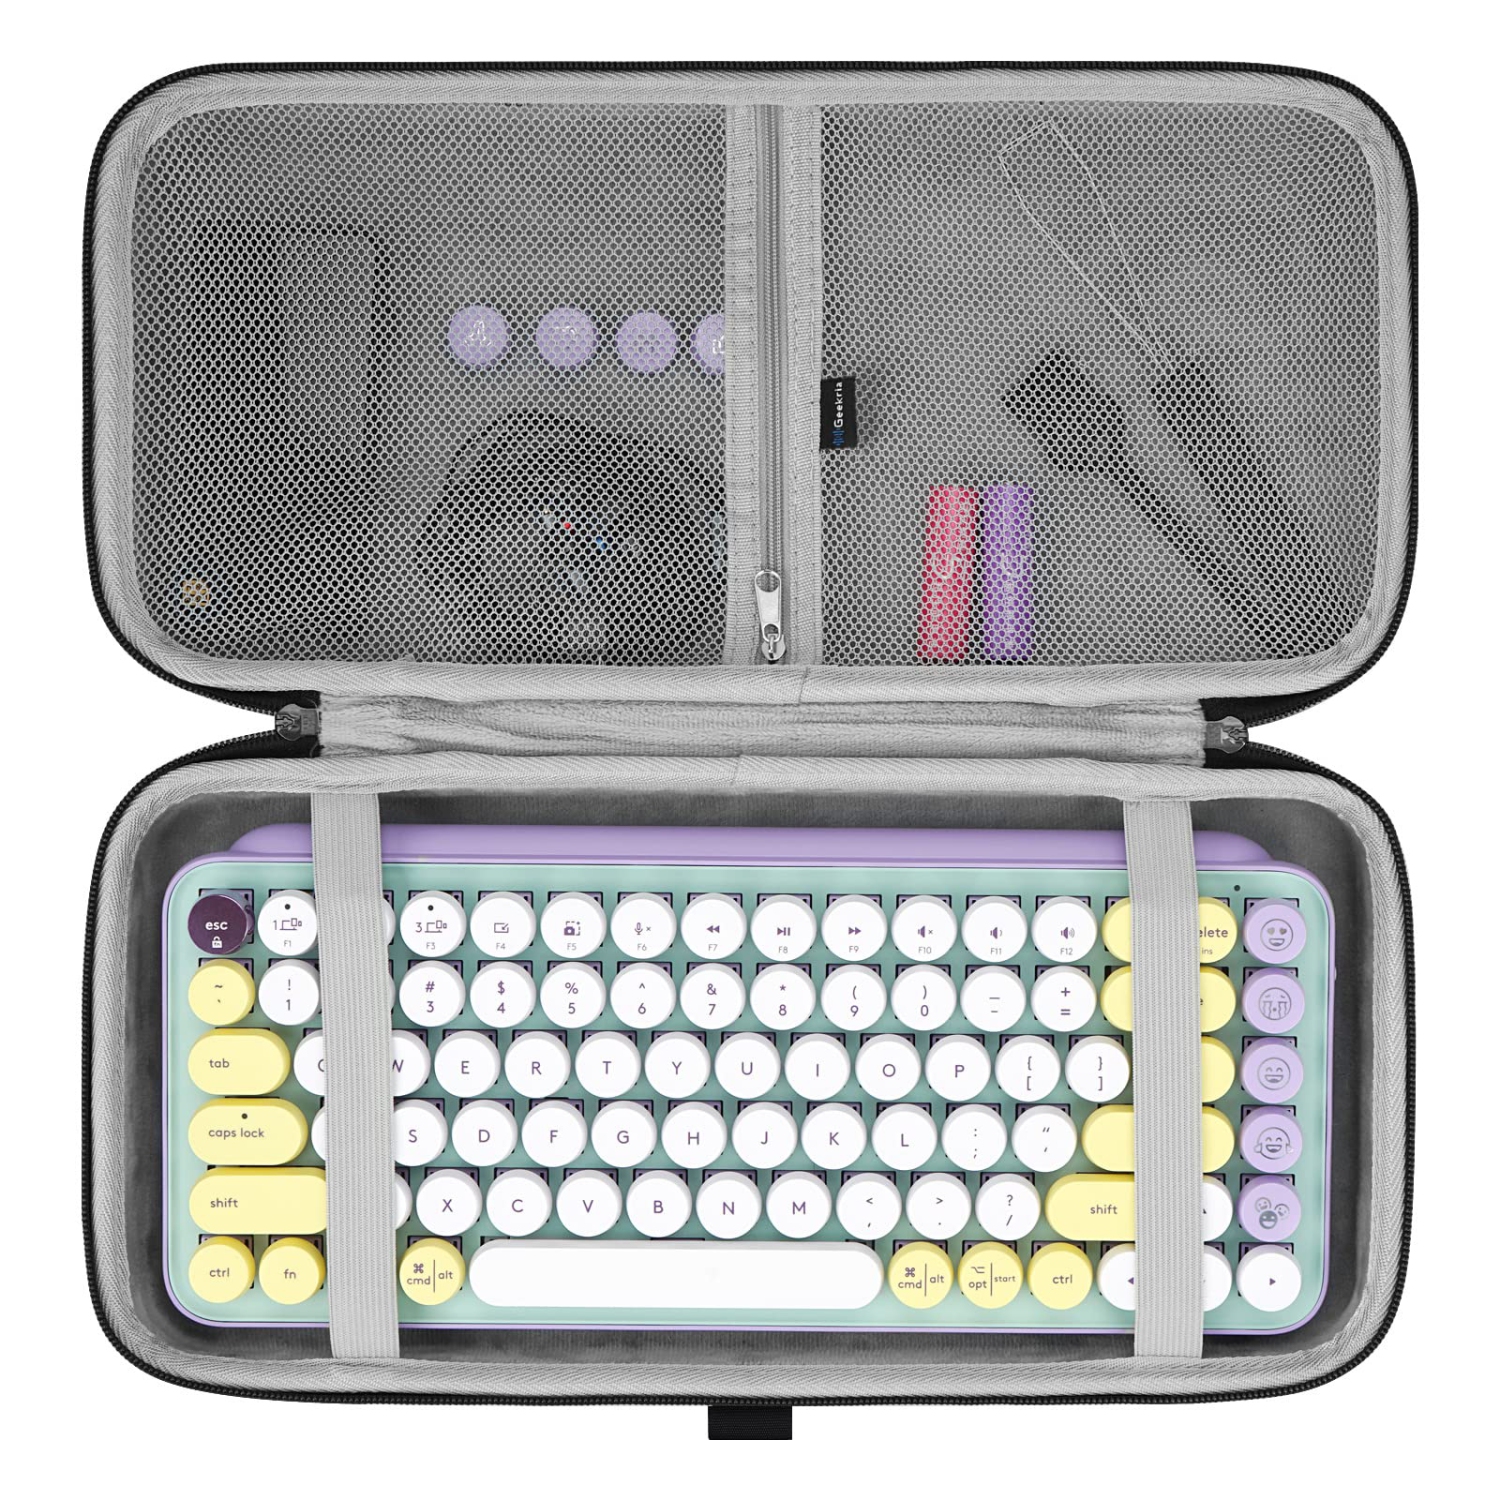 75% Keyboard Case, Hard Shell Travel Carrying Bag for 84 Key Wireless Portable Keyboard, Compatible with Keychron K2, Logitech POP Keys Mechanical, MX Mini Wireless Keyboard